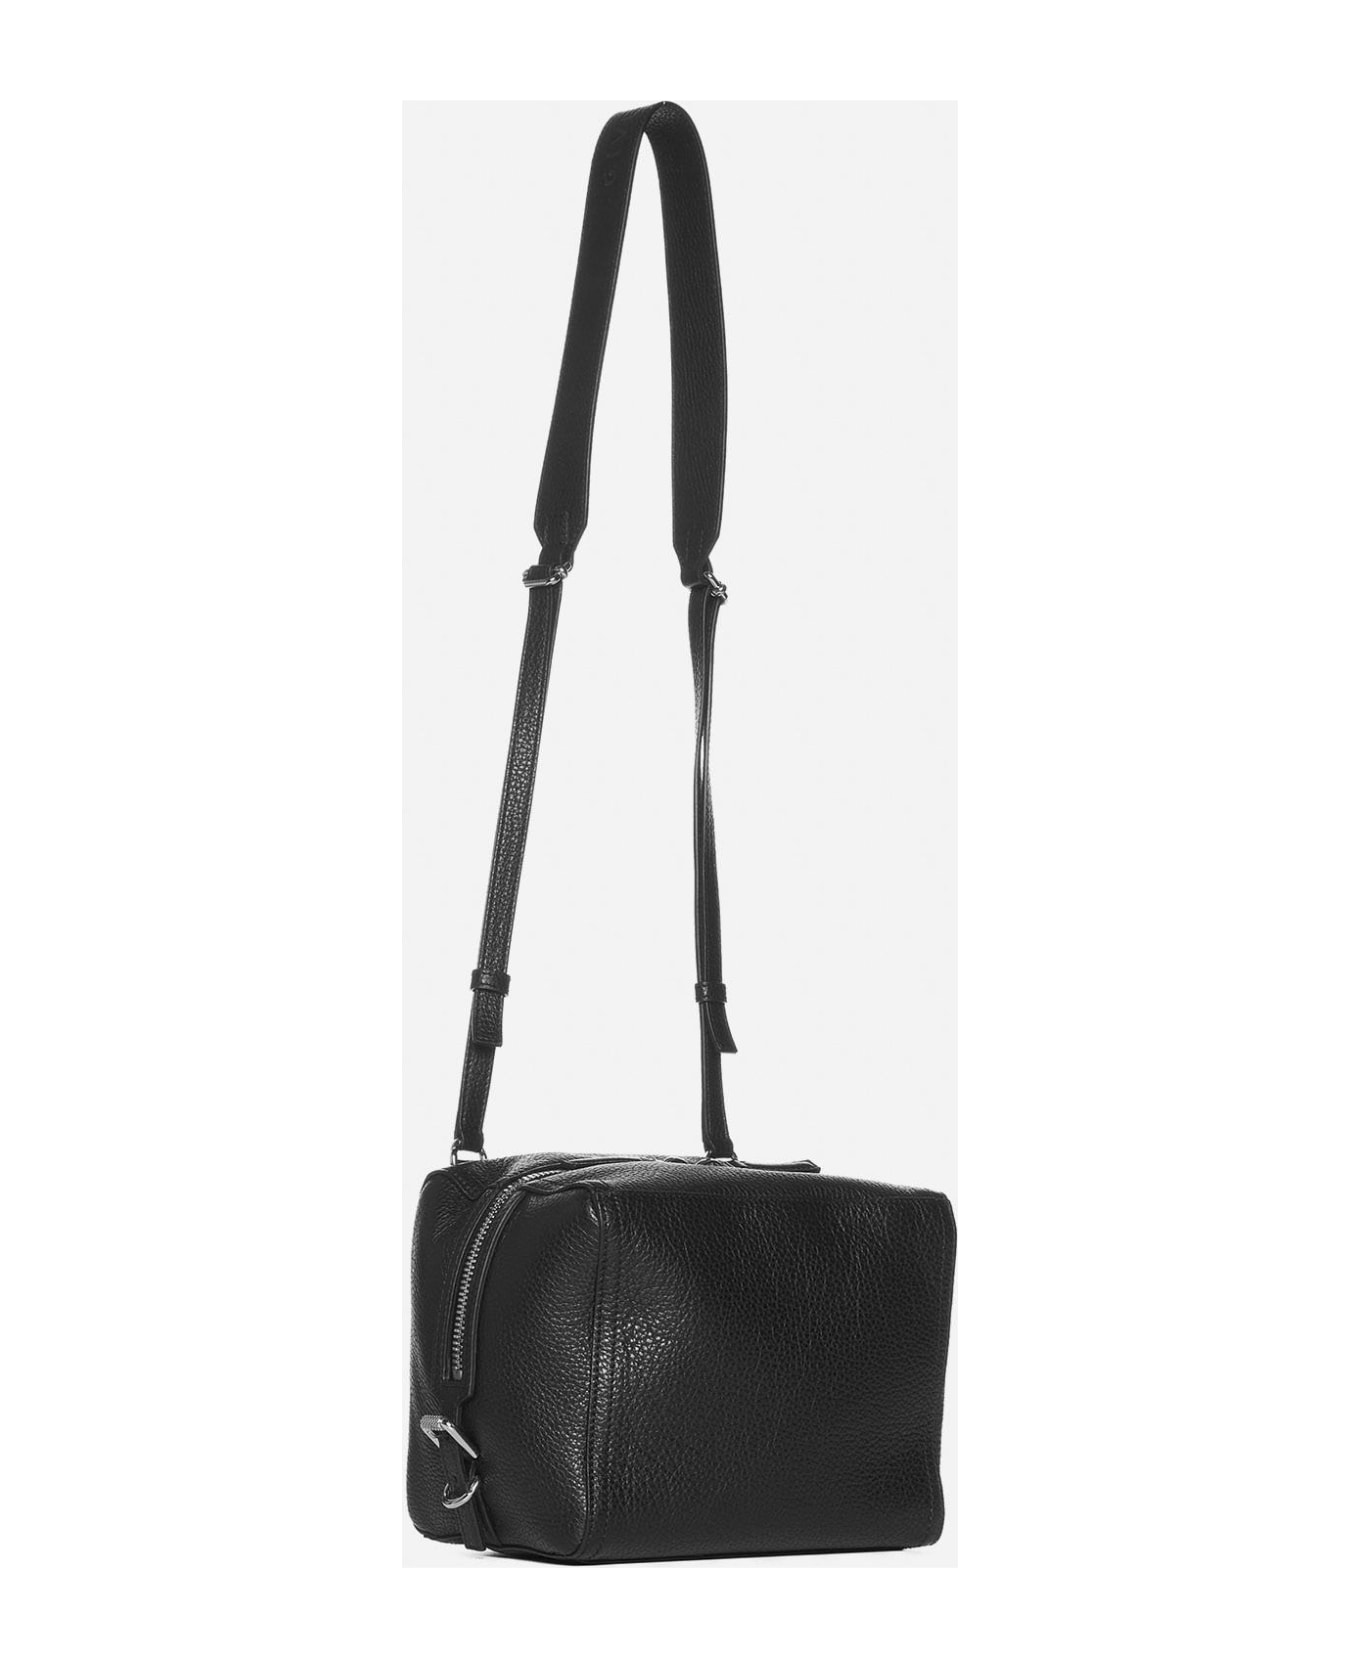 Givenchy Pandora Leather Small Bag - Black